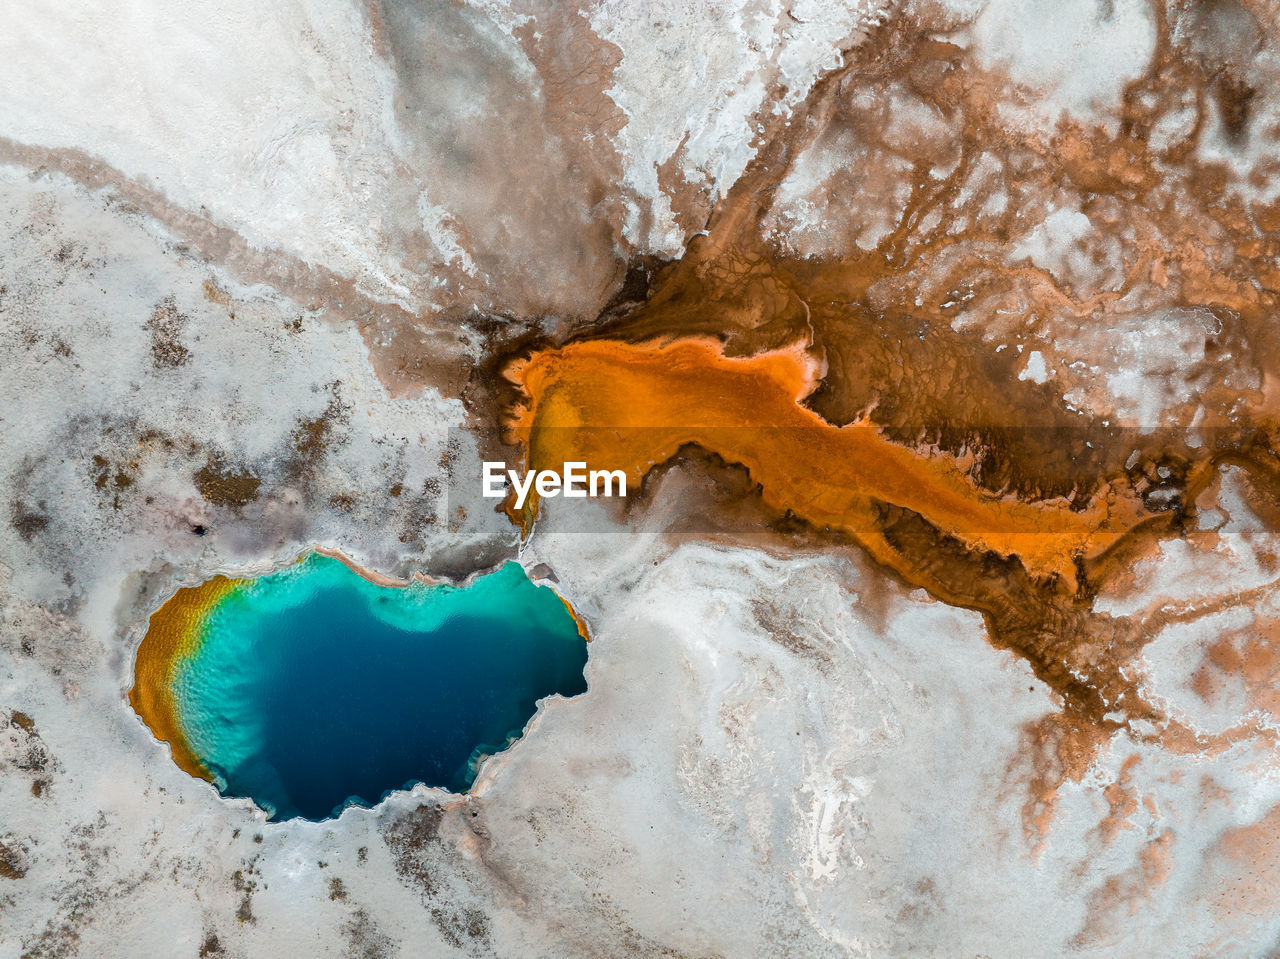 Upper geyser basin of yellowstone national park, wyoming, united states